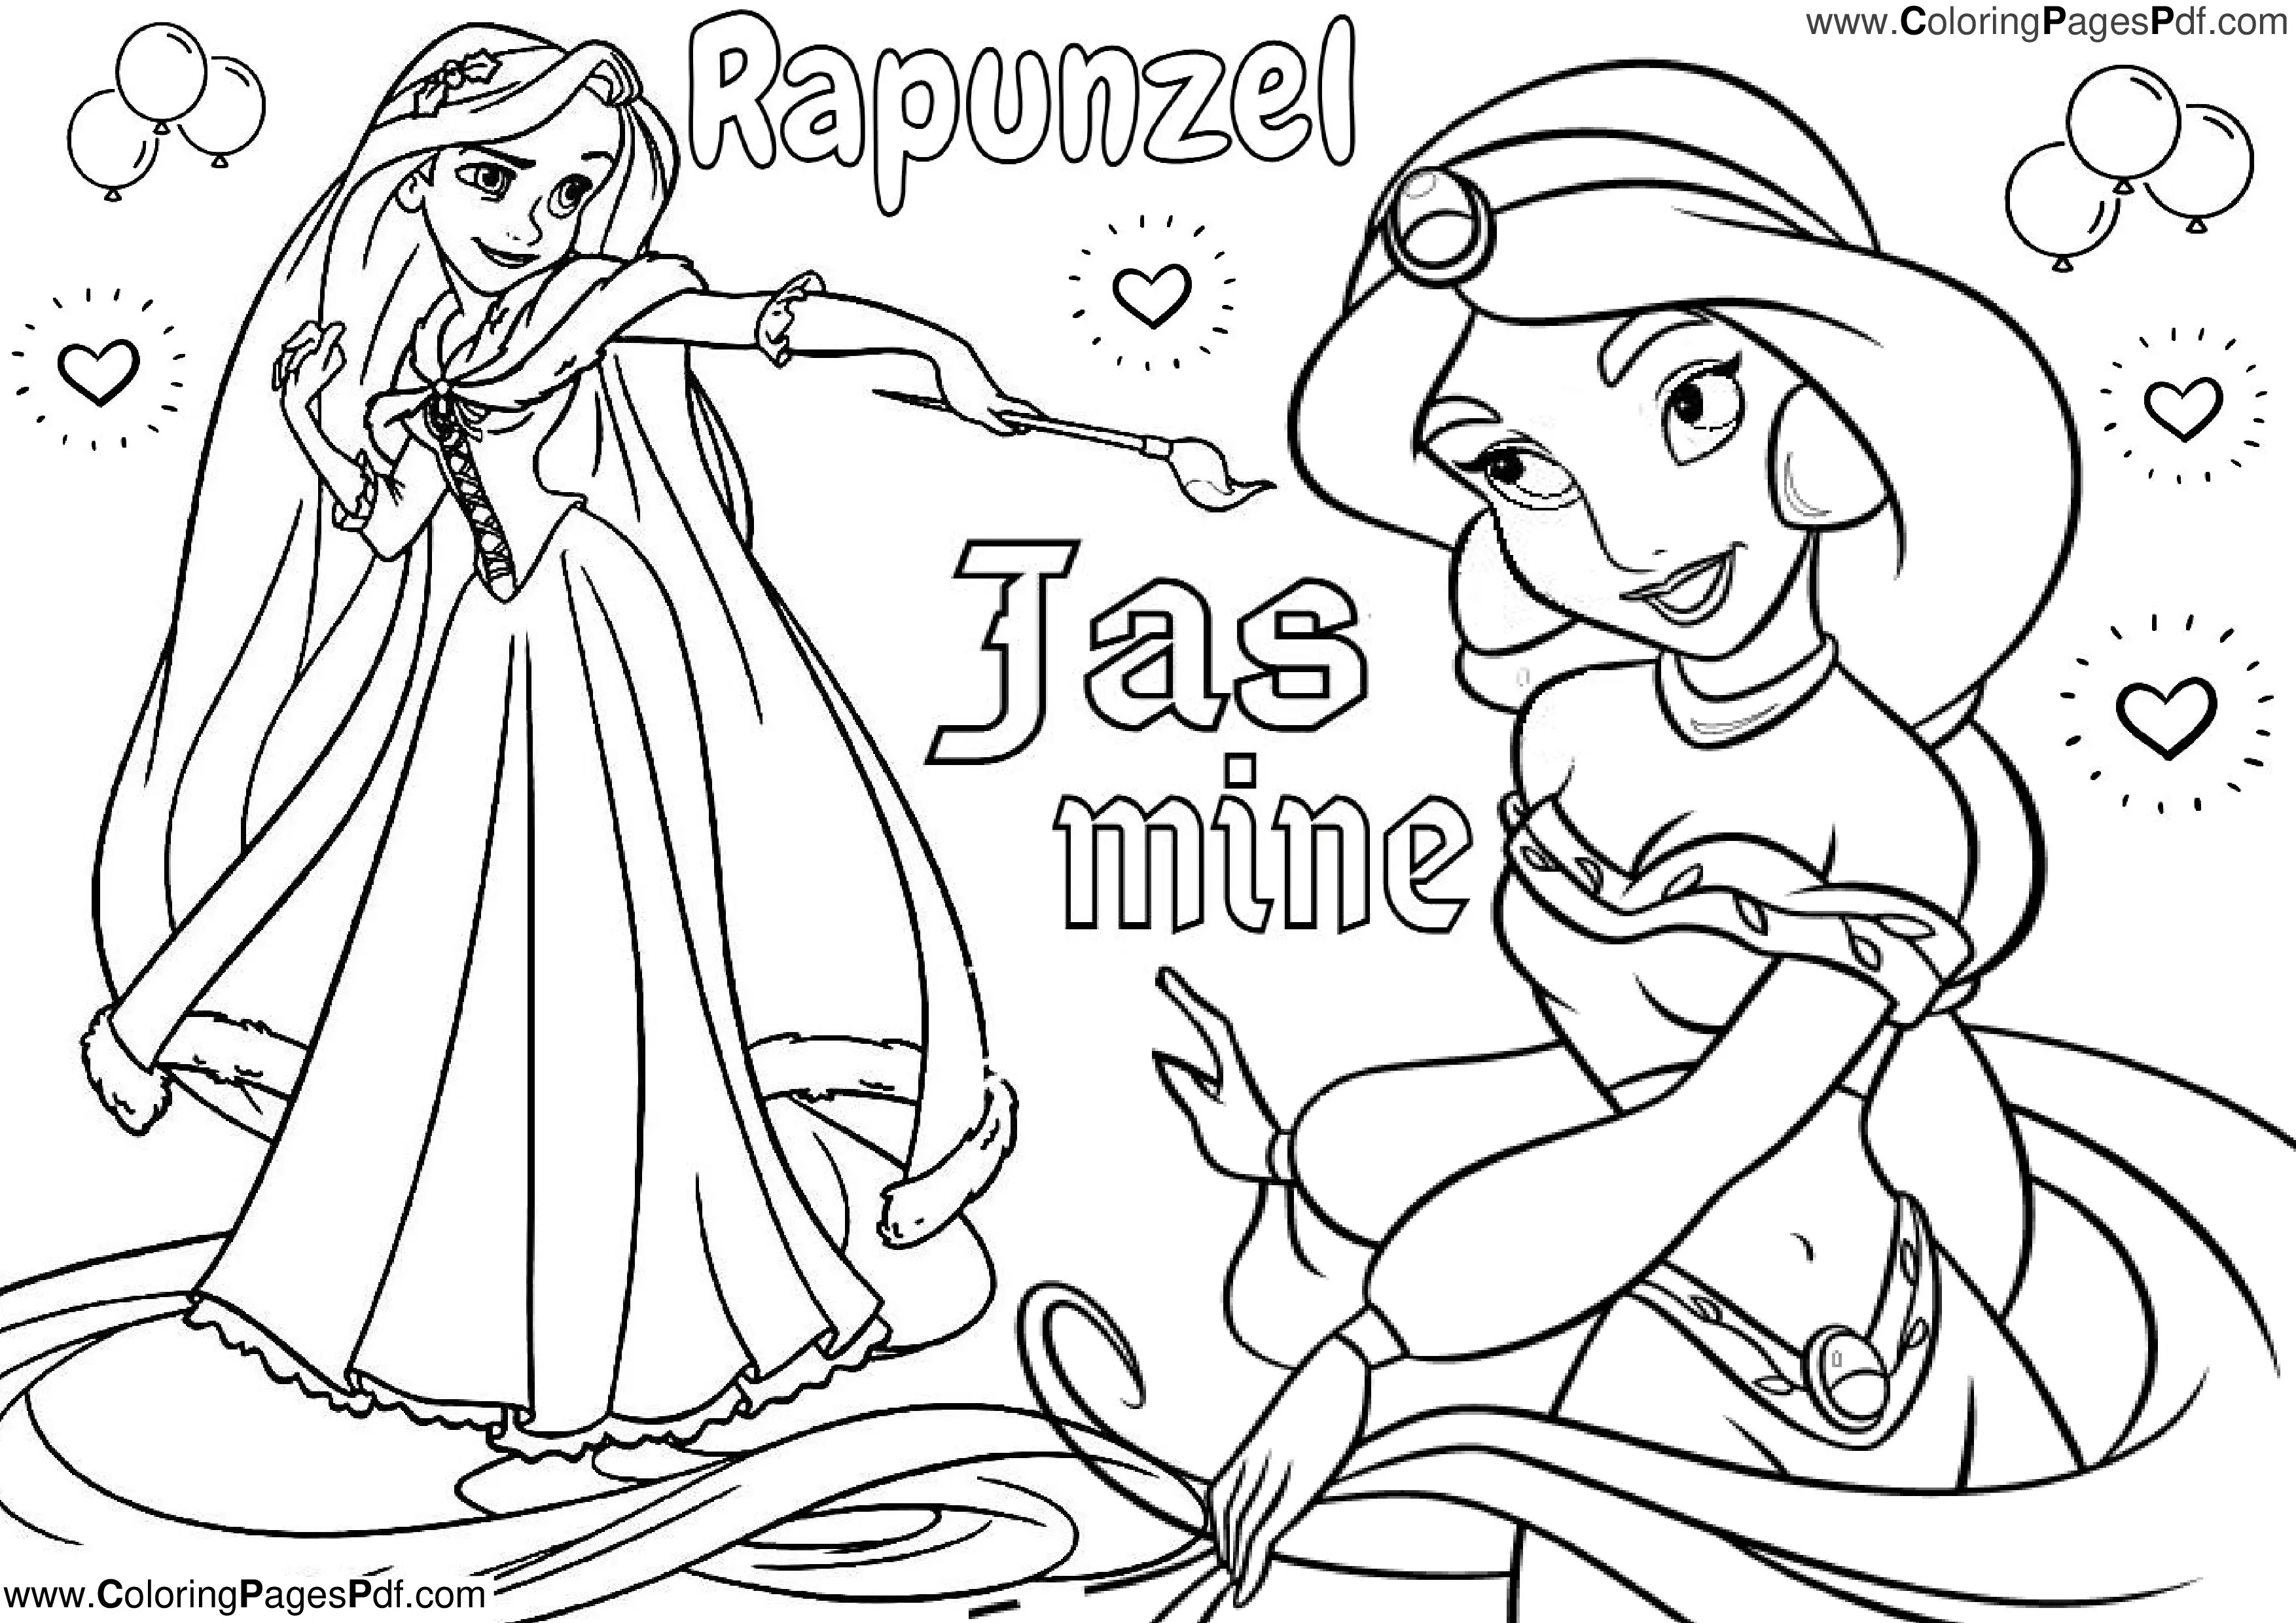 Rapunzel & Jasmine coloring pages